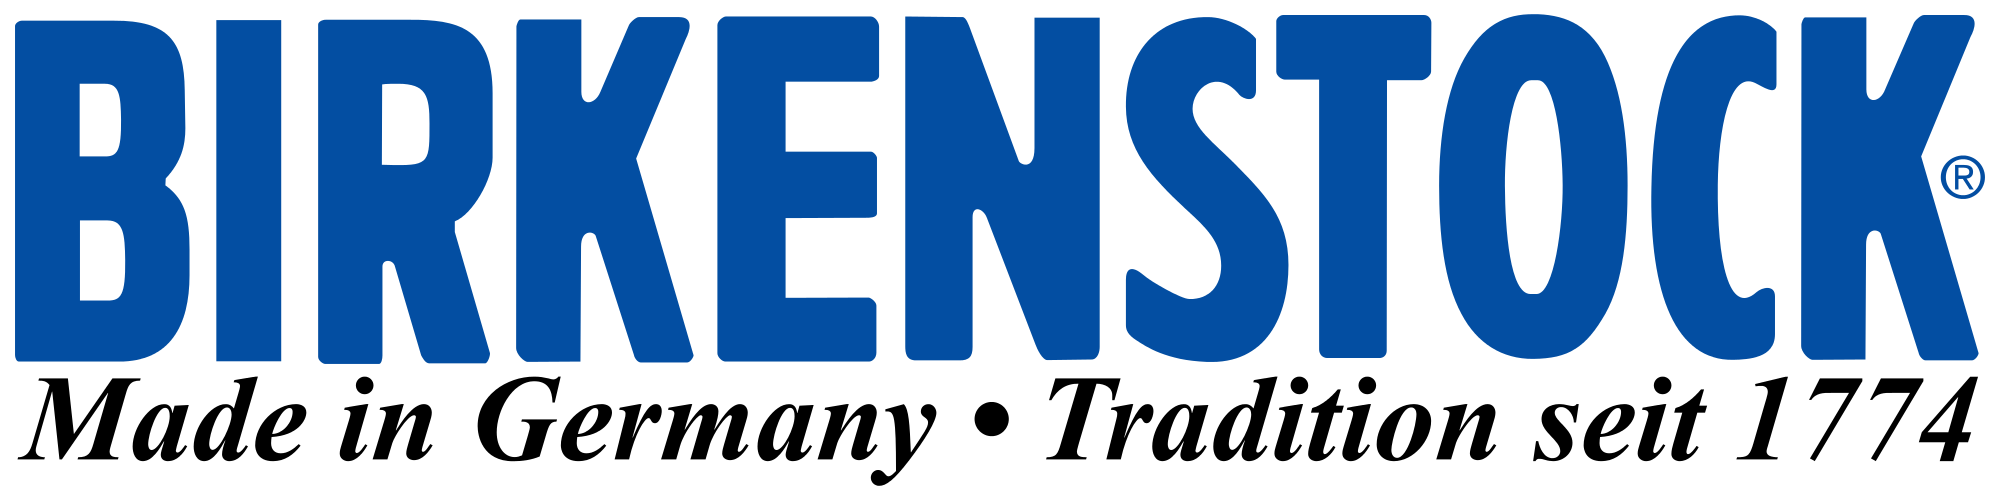 Birkenstock logo